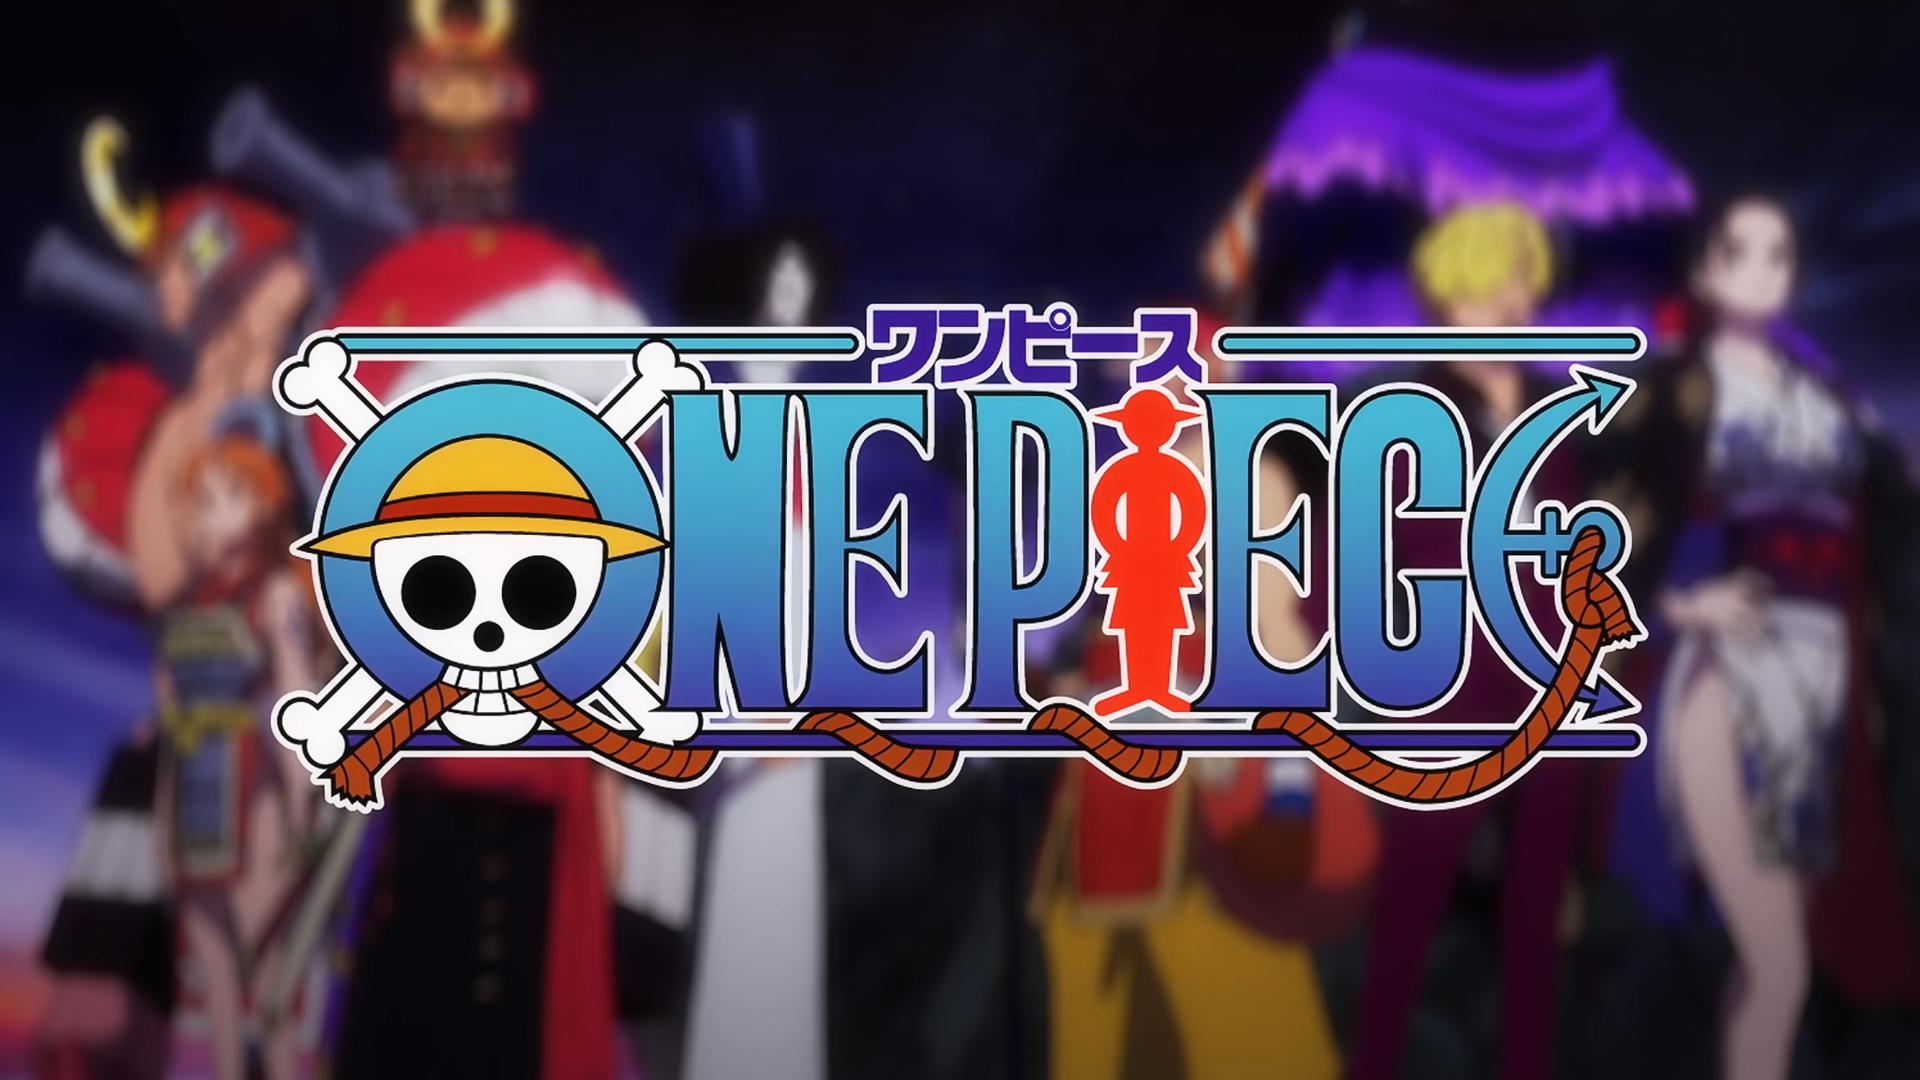 One Piece Episode 1008 Intelligence: Ulti vs Nami, Usopp's nose bone is  broken again, it's so miserable - iNEWS